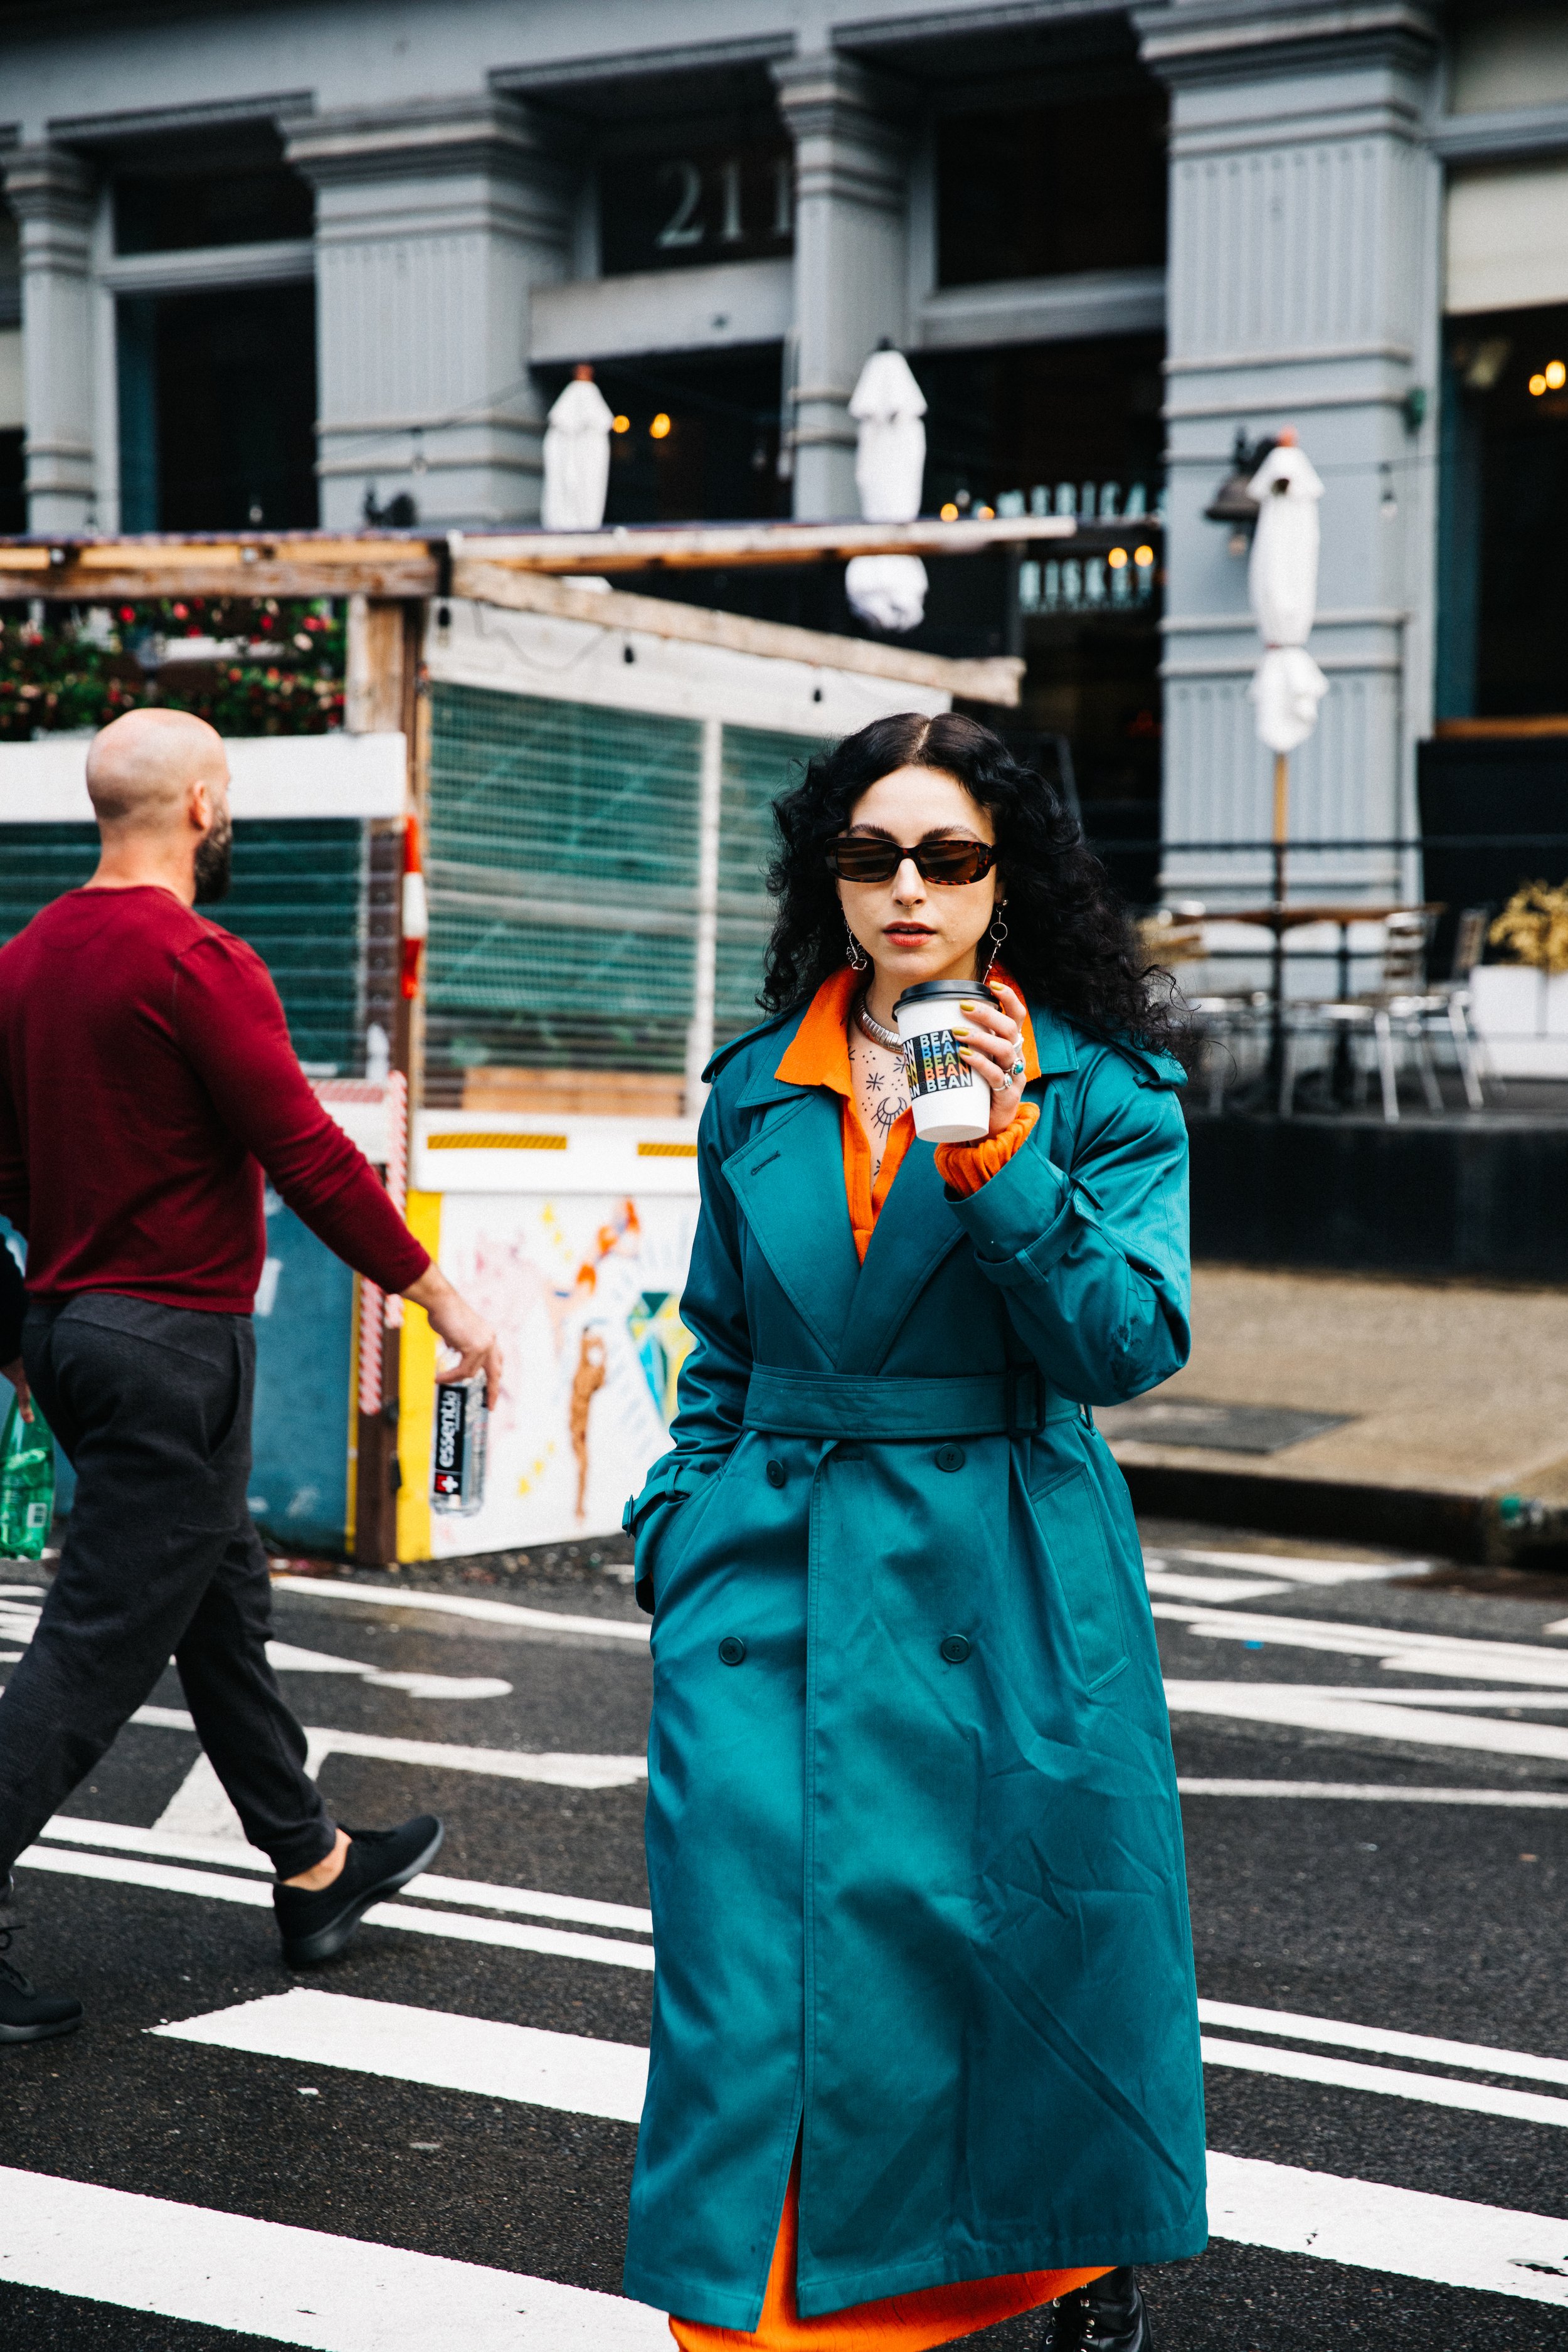 Walking in the Street in NYC Drinking Bean2Bean Coffee, Photo by Corey Jermaine